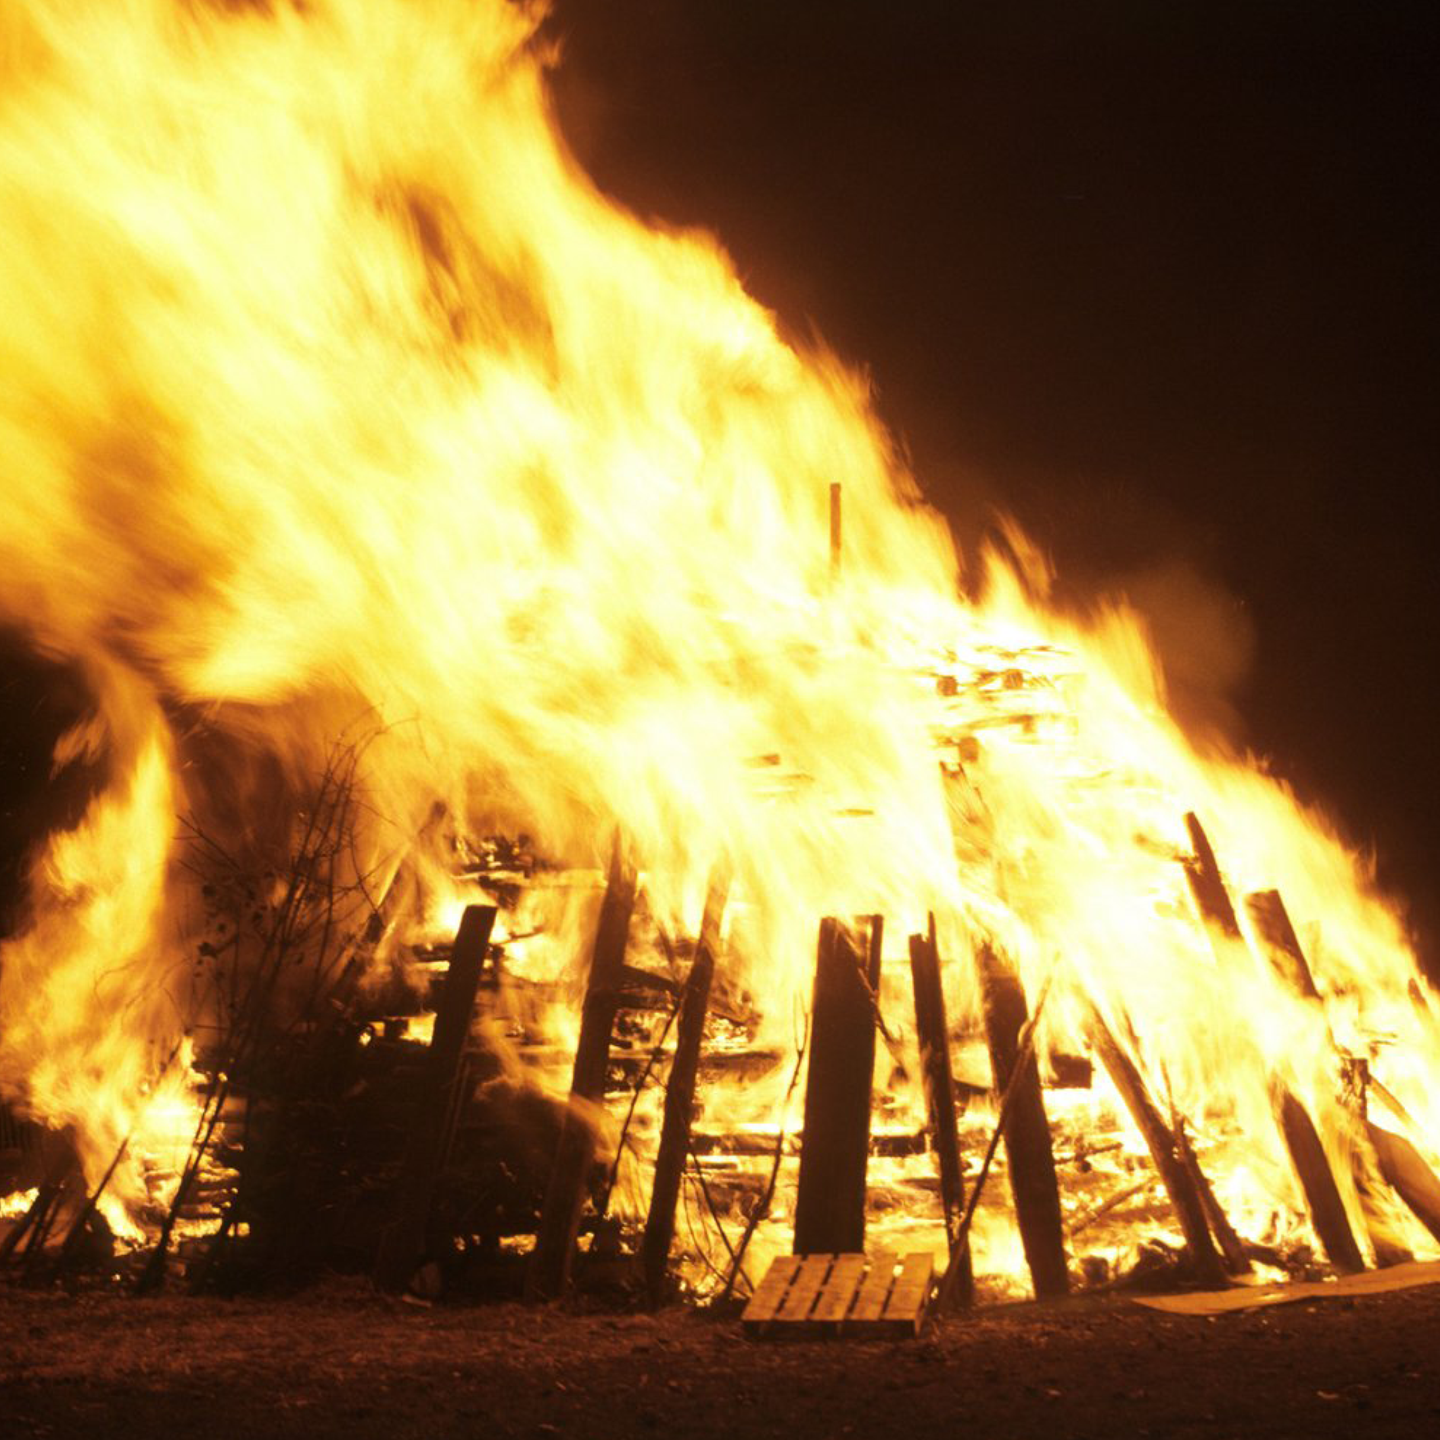 Image: a bonfire burning against a black sky